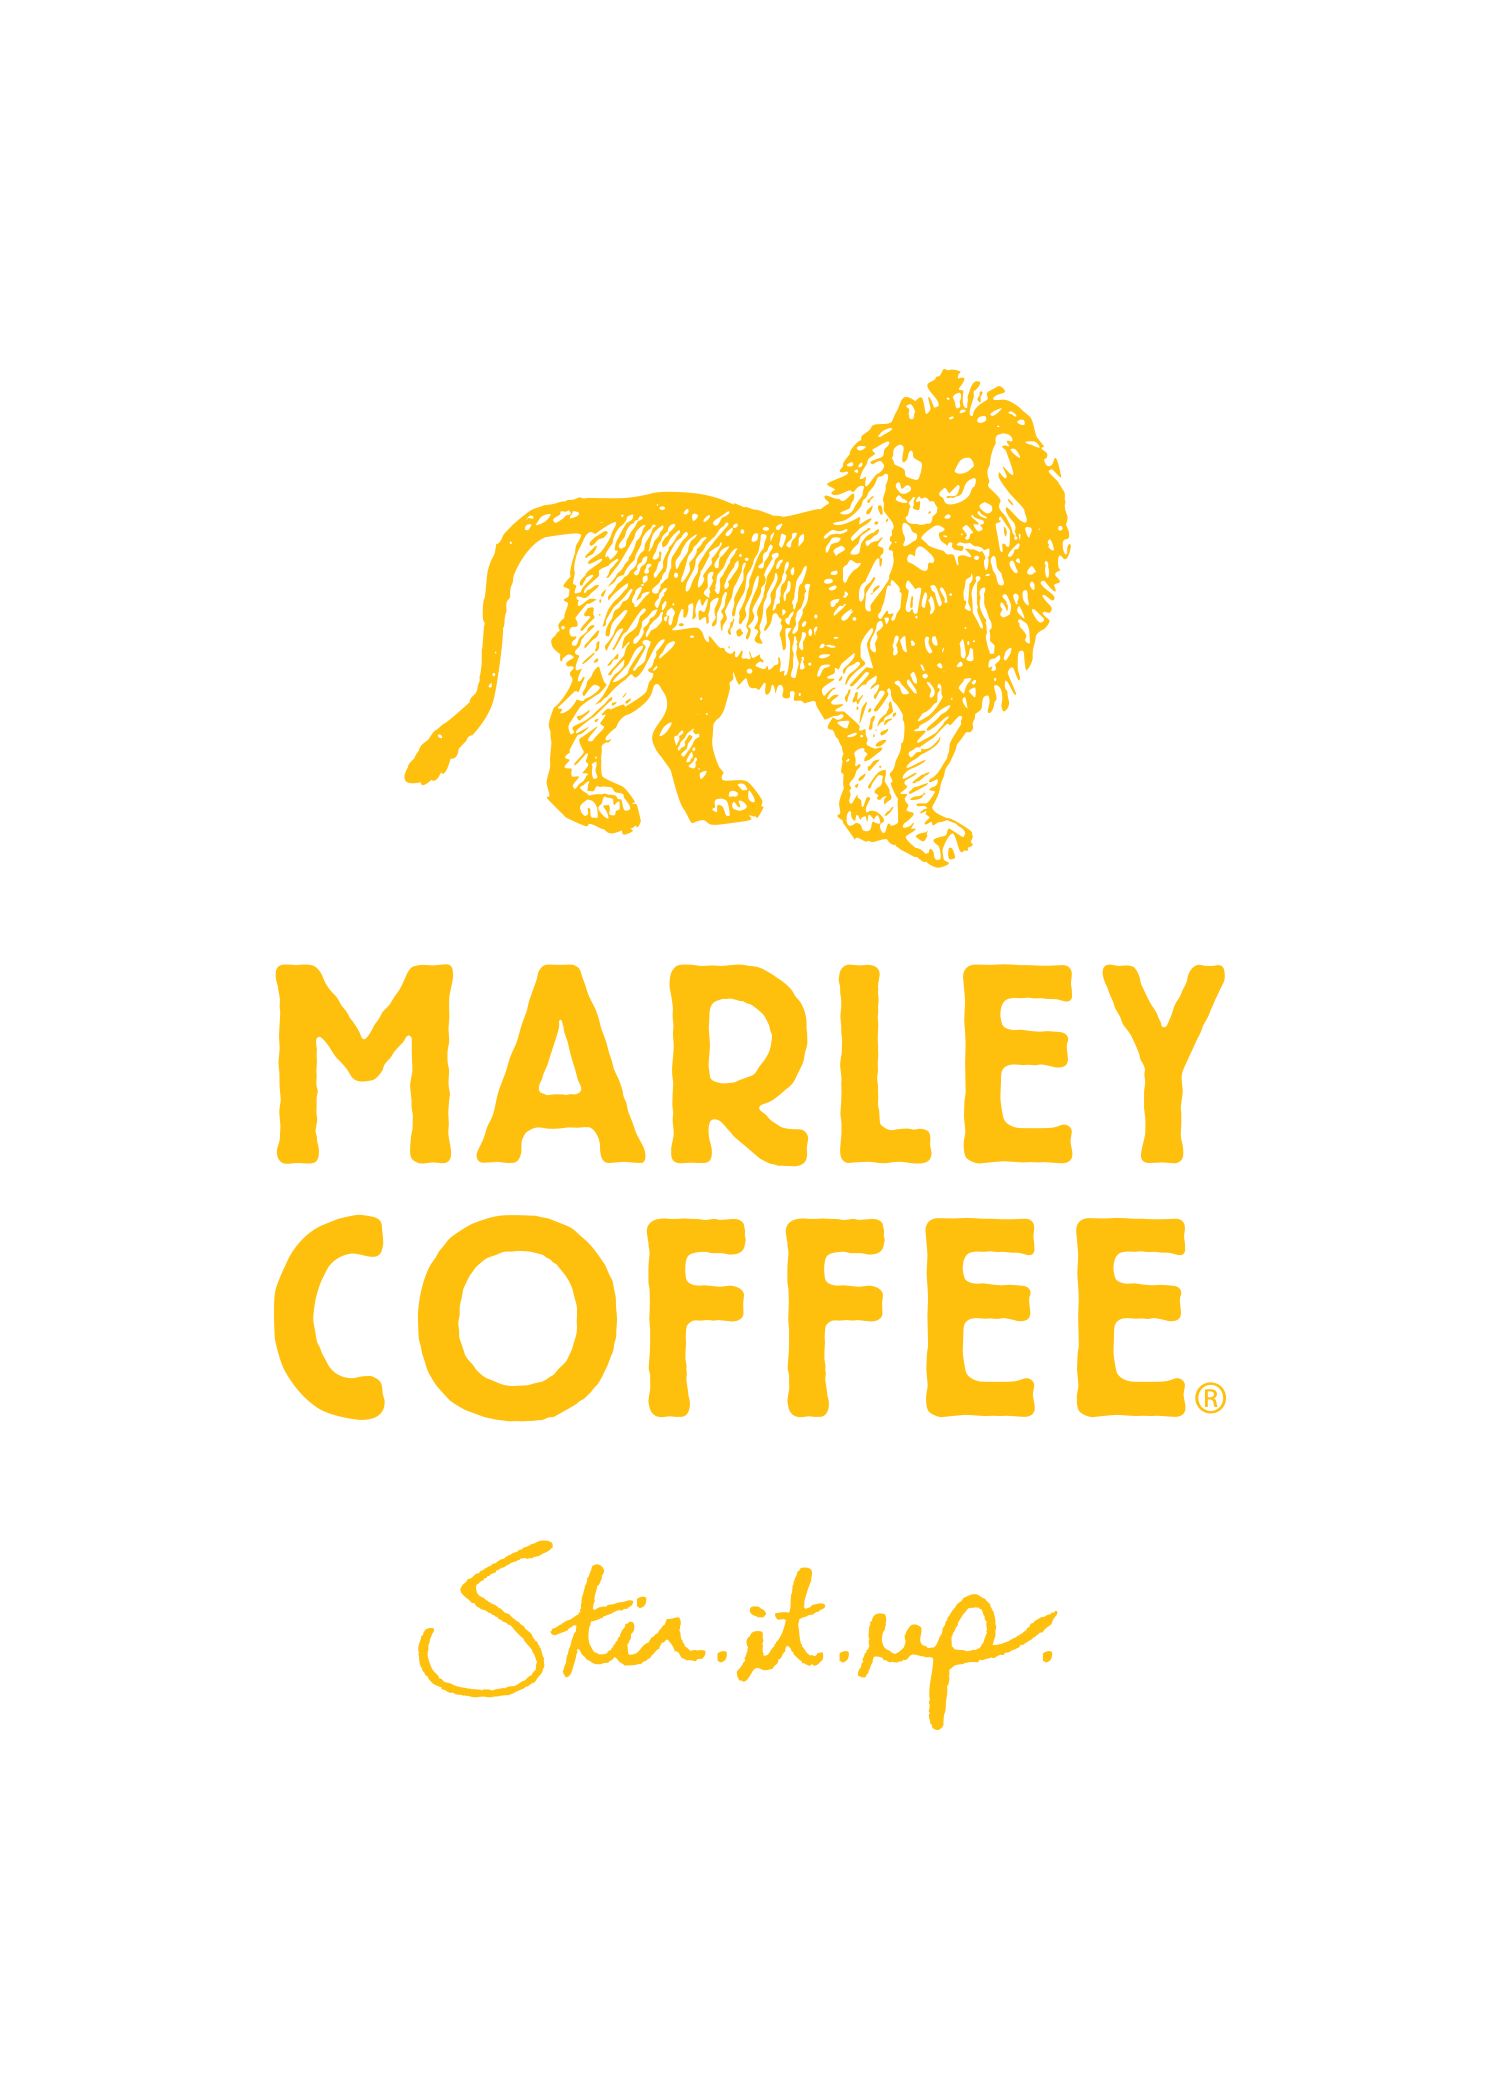 Marley Coffee Broade